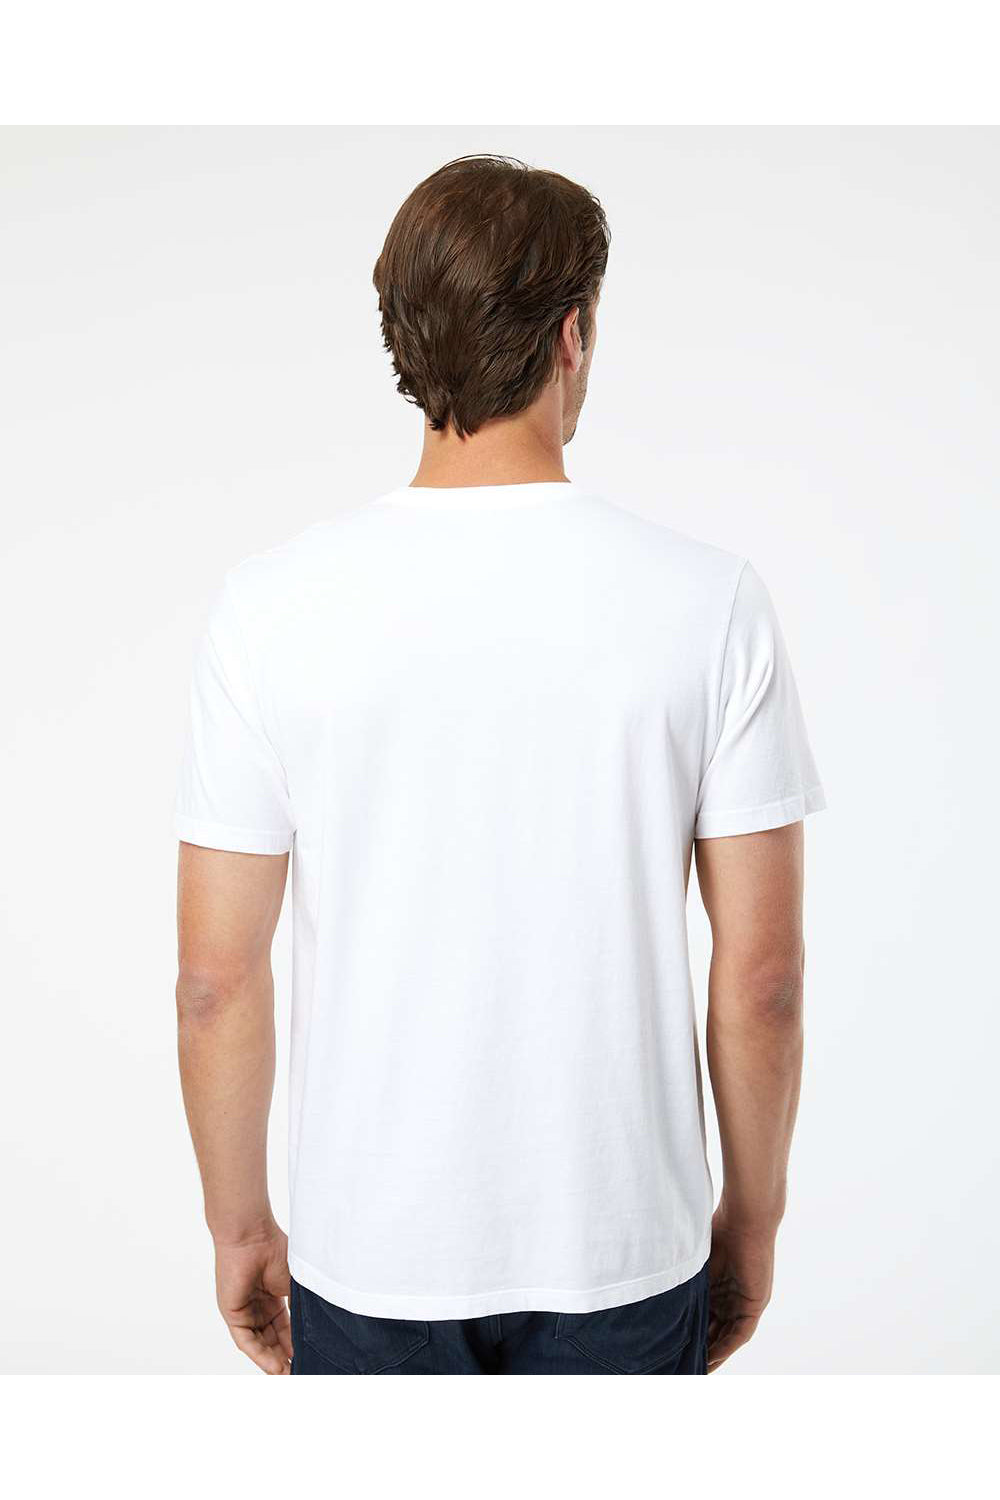 SoftShirts 400 Mens Organic Short Sleeve Crewneck T-Shirt White Model Back